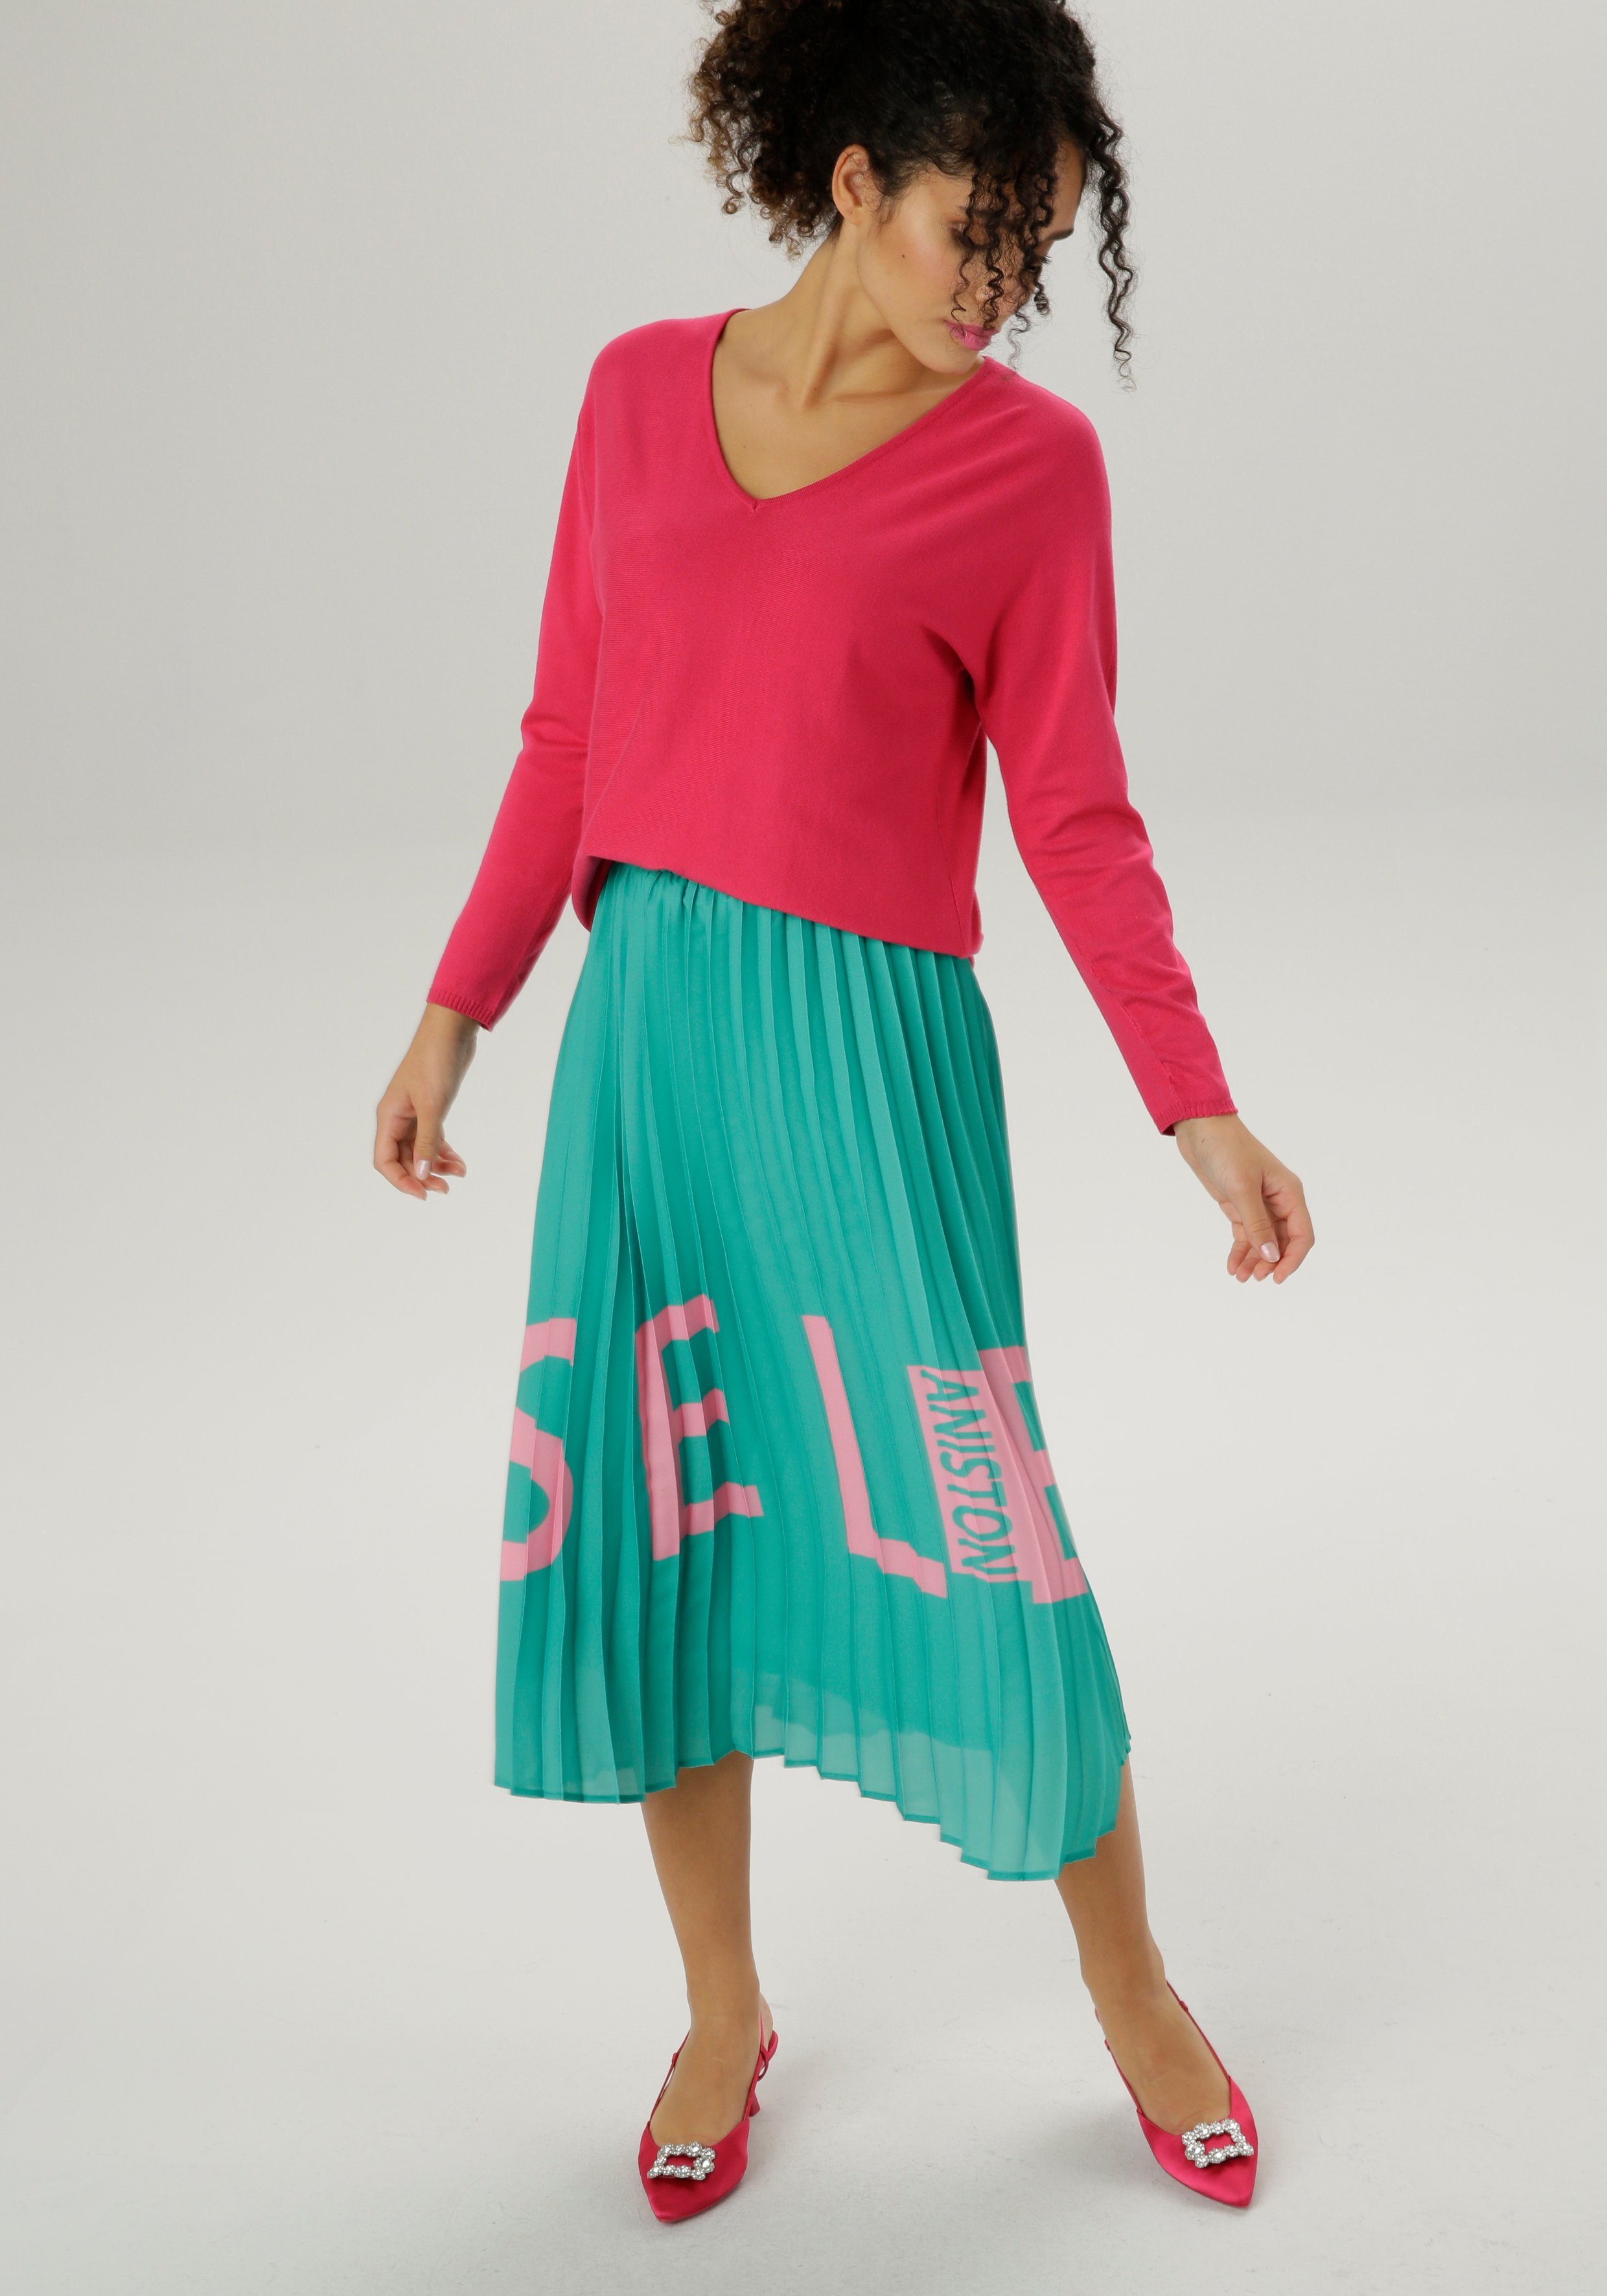 Aniston SELECTED Plisseerock mit Knallfarbe in Markenschriftzug grün-pink